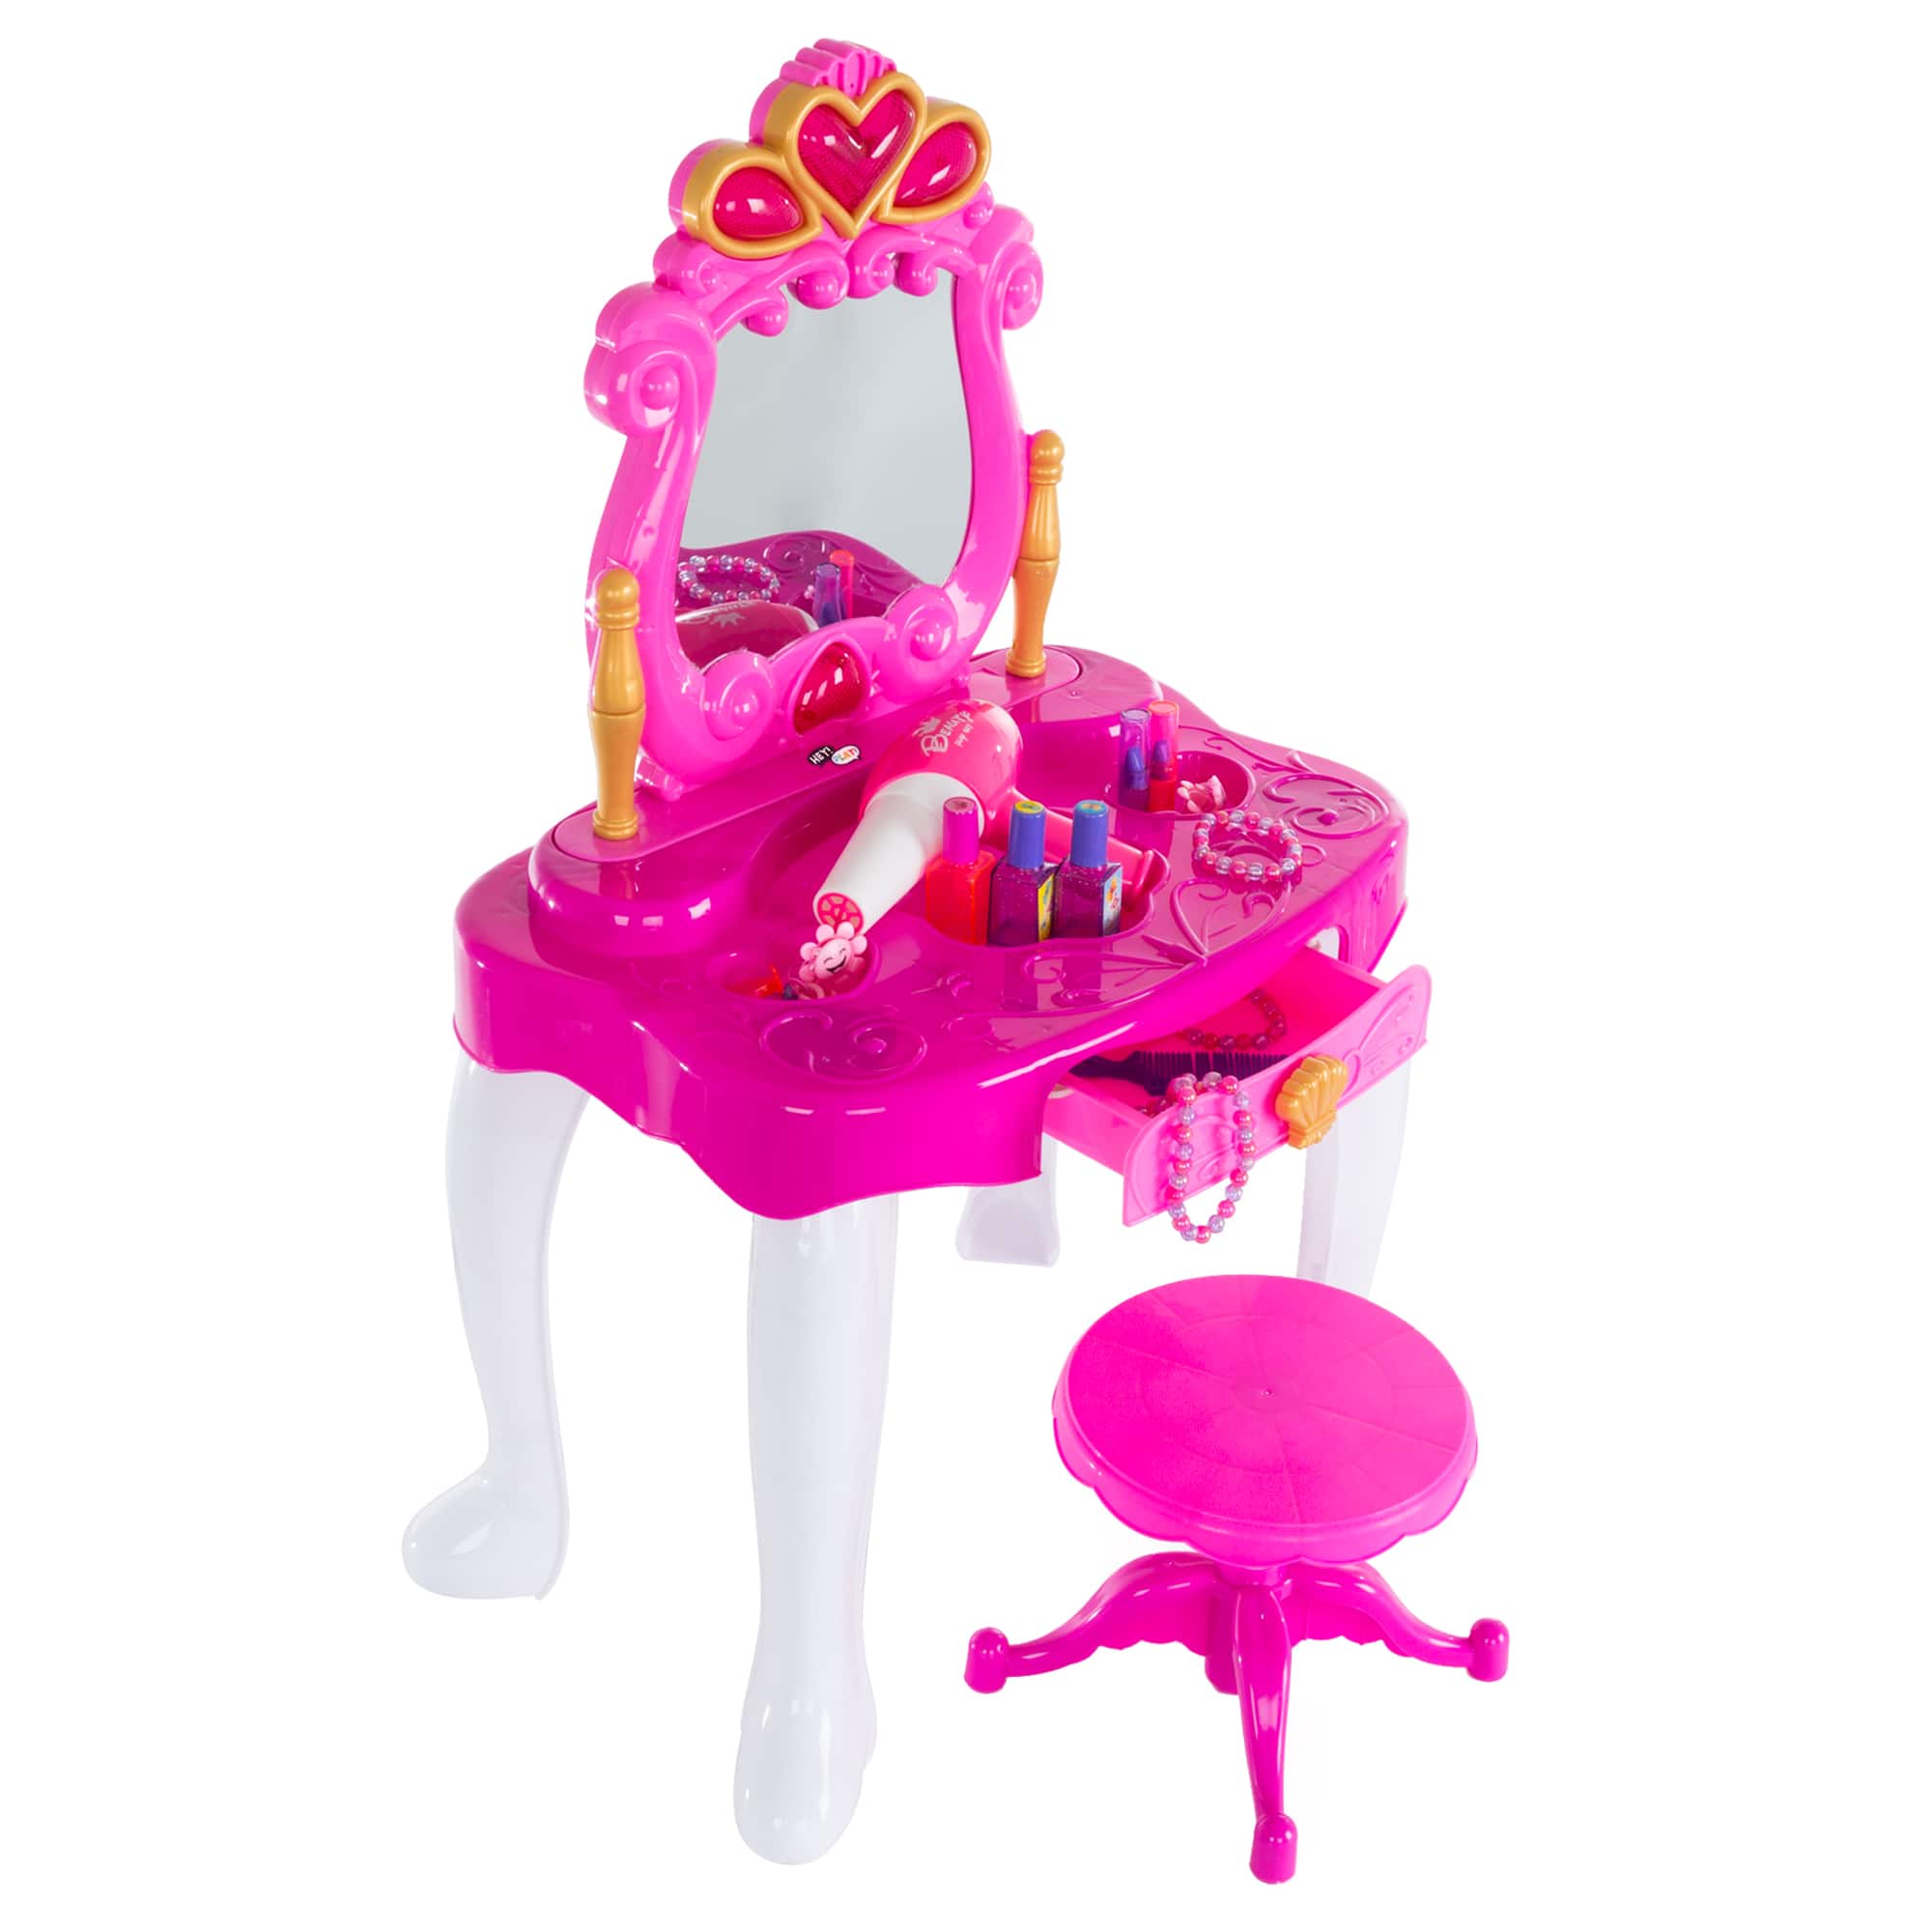 Toy Time Pretend Play Princess Vanity Toy Set | Michaels